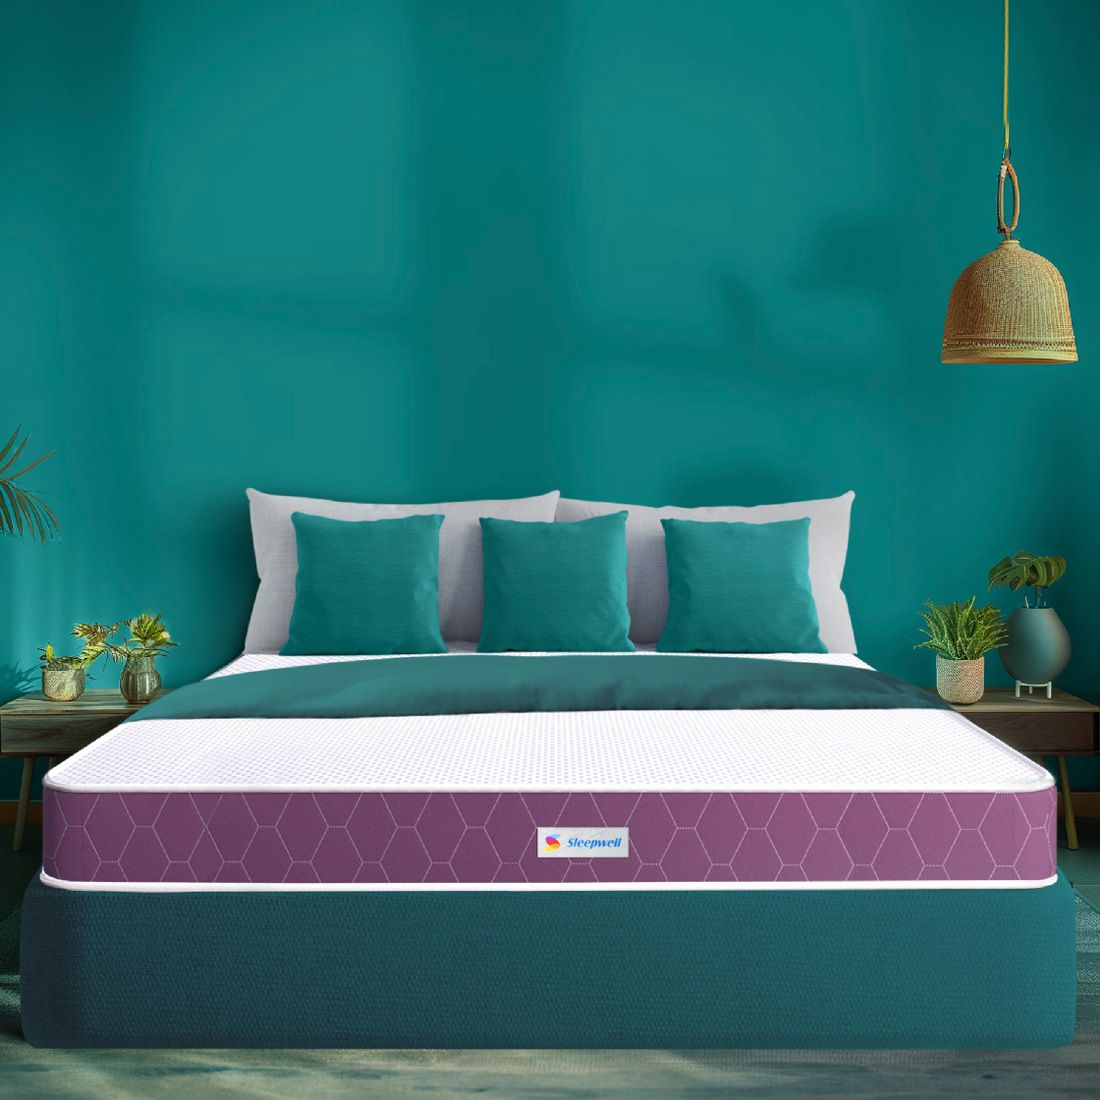 Sleepwell Ortho Mattress | Quilted | 8-inch King Bed Size, Impressions Memory Foam, Medium Firm Mattress(Purple, 75x70X8)